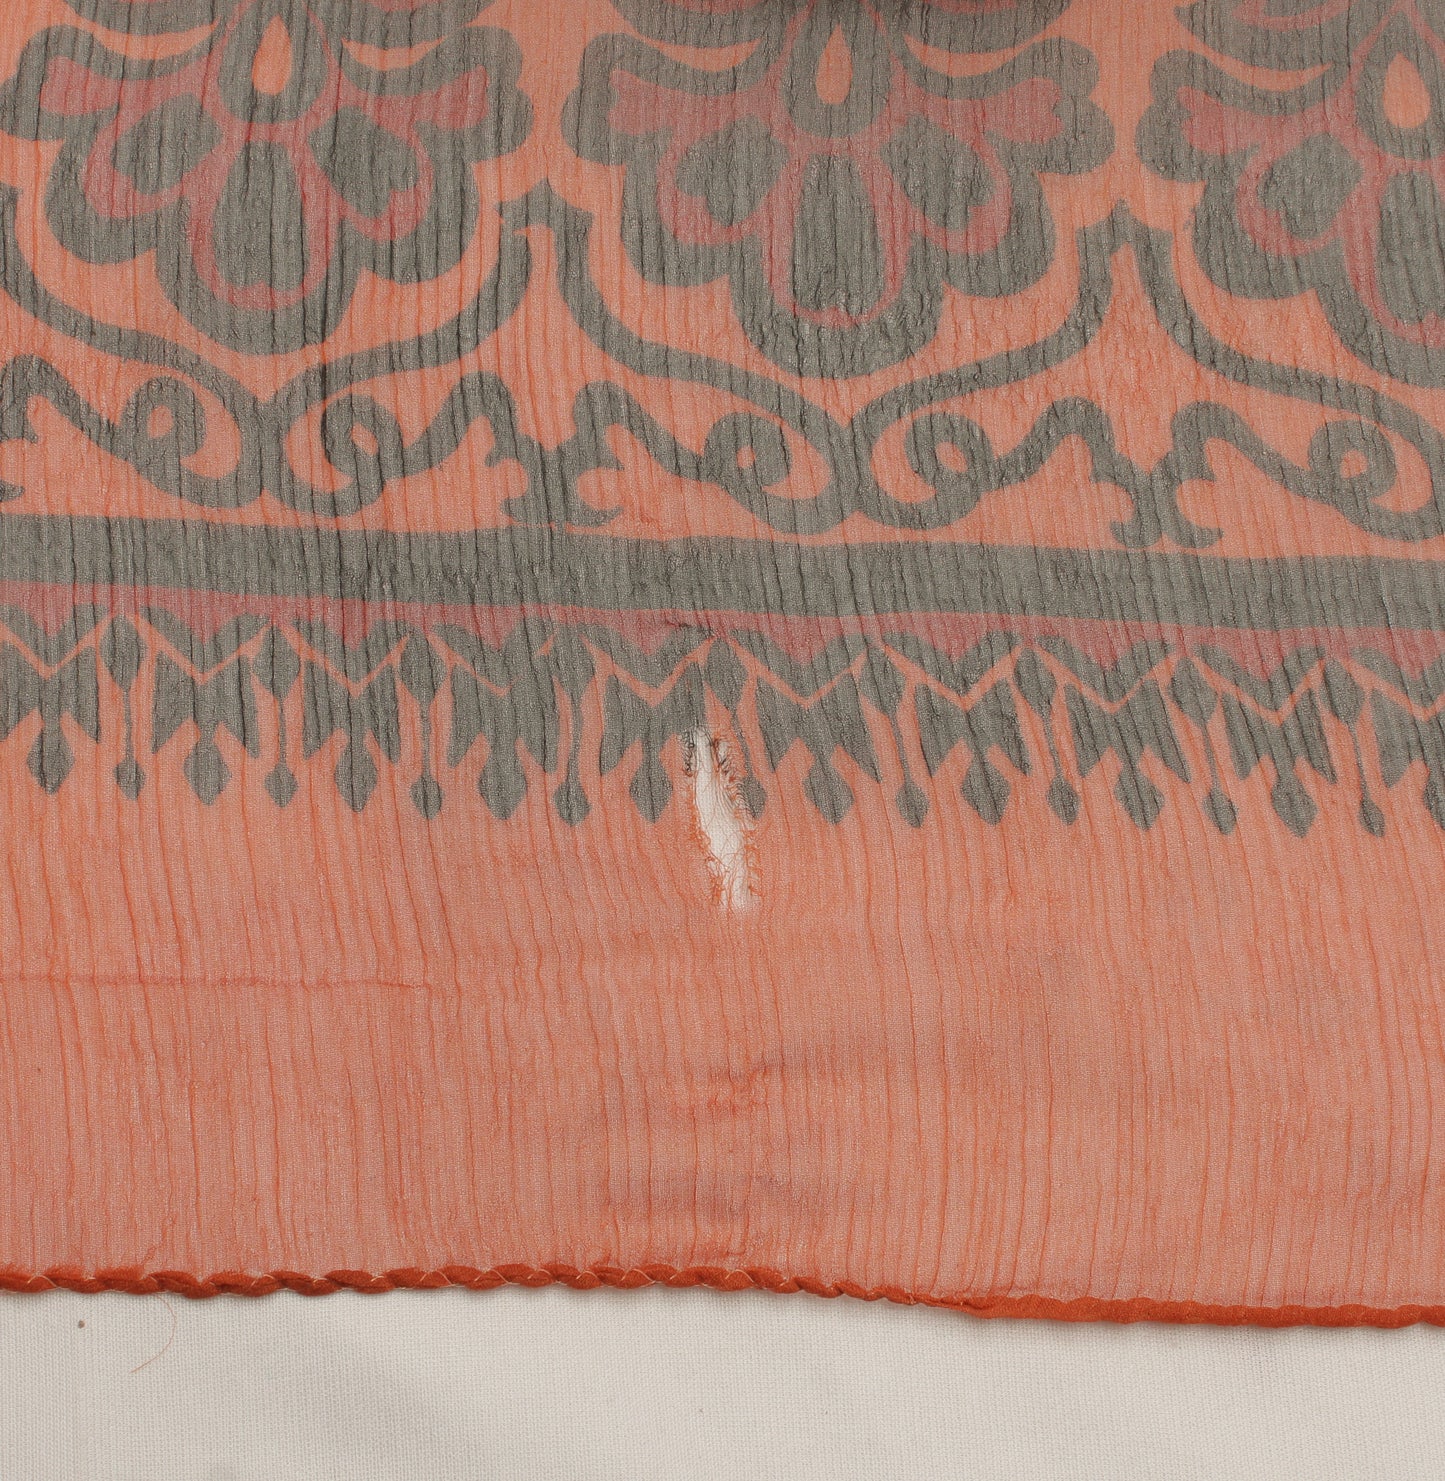 Sushila Vintage Brown Scrap Saree Blend Chiffon Silk Printed Floral Sari Fabric